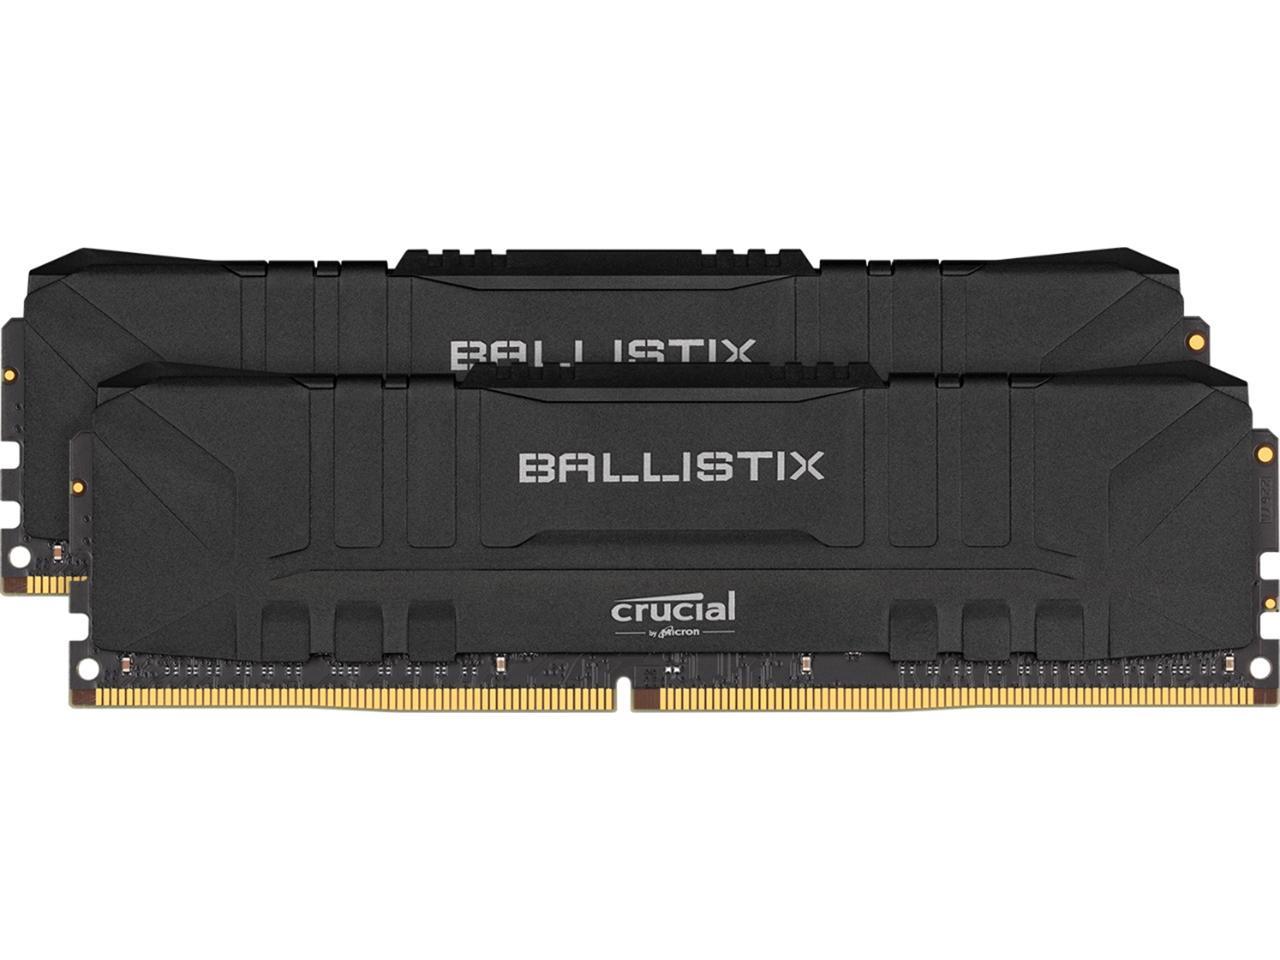 Crucial memory D4 3200 16GB C16 Ball K2 16GB (8GB x 2), black (BL2K8G32C16U4B)